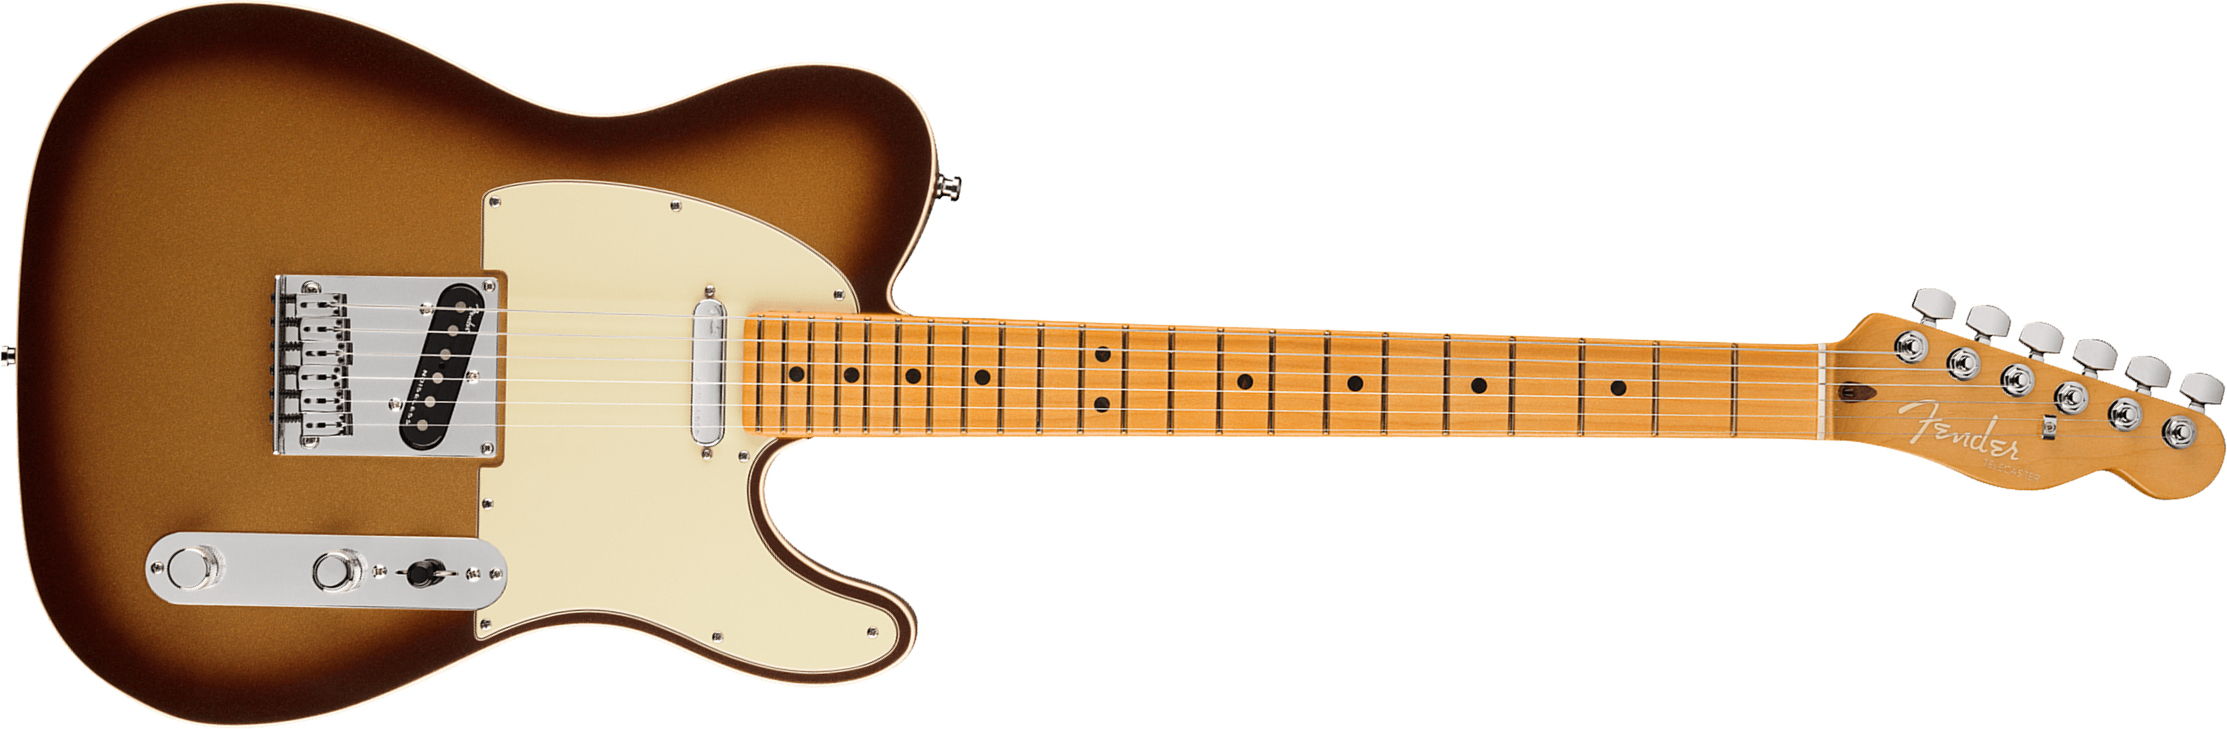 Fender Tele American Ultra 2019 Usa Mn - Mocha Burst - Guitarra eléctrica con forma de tel - Main picture